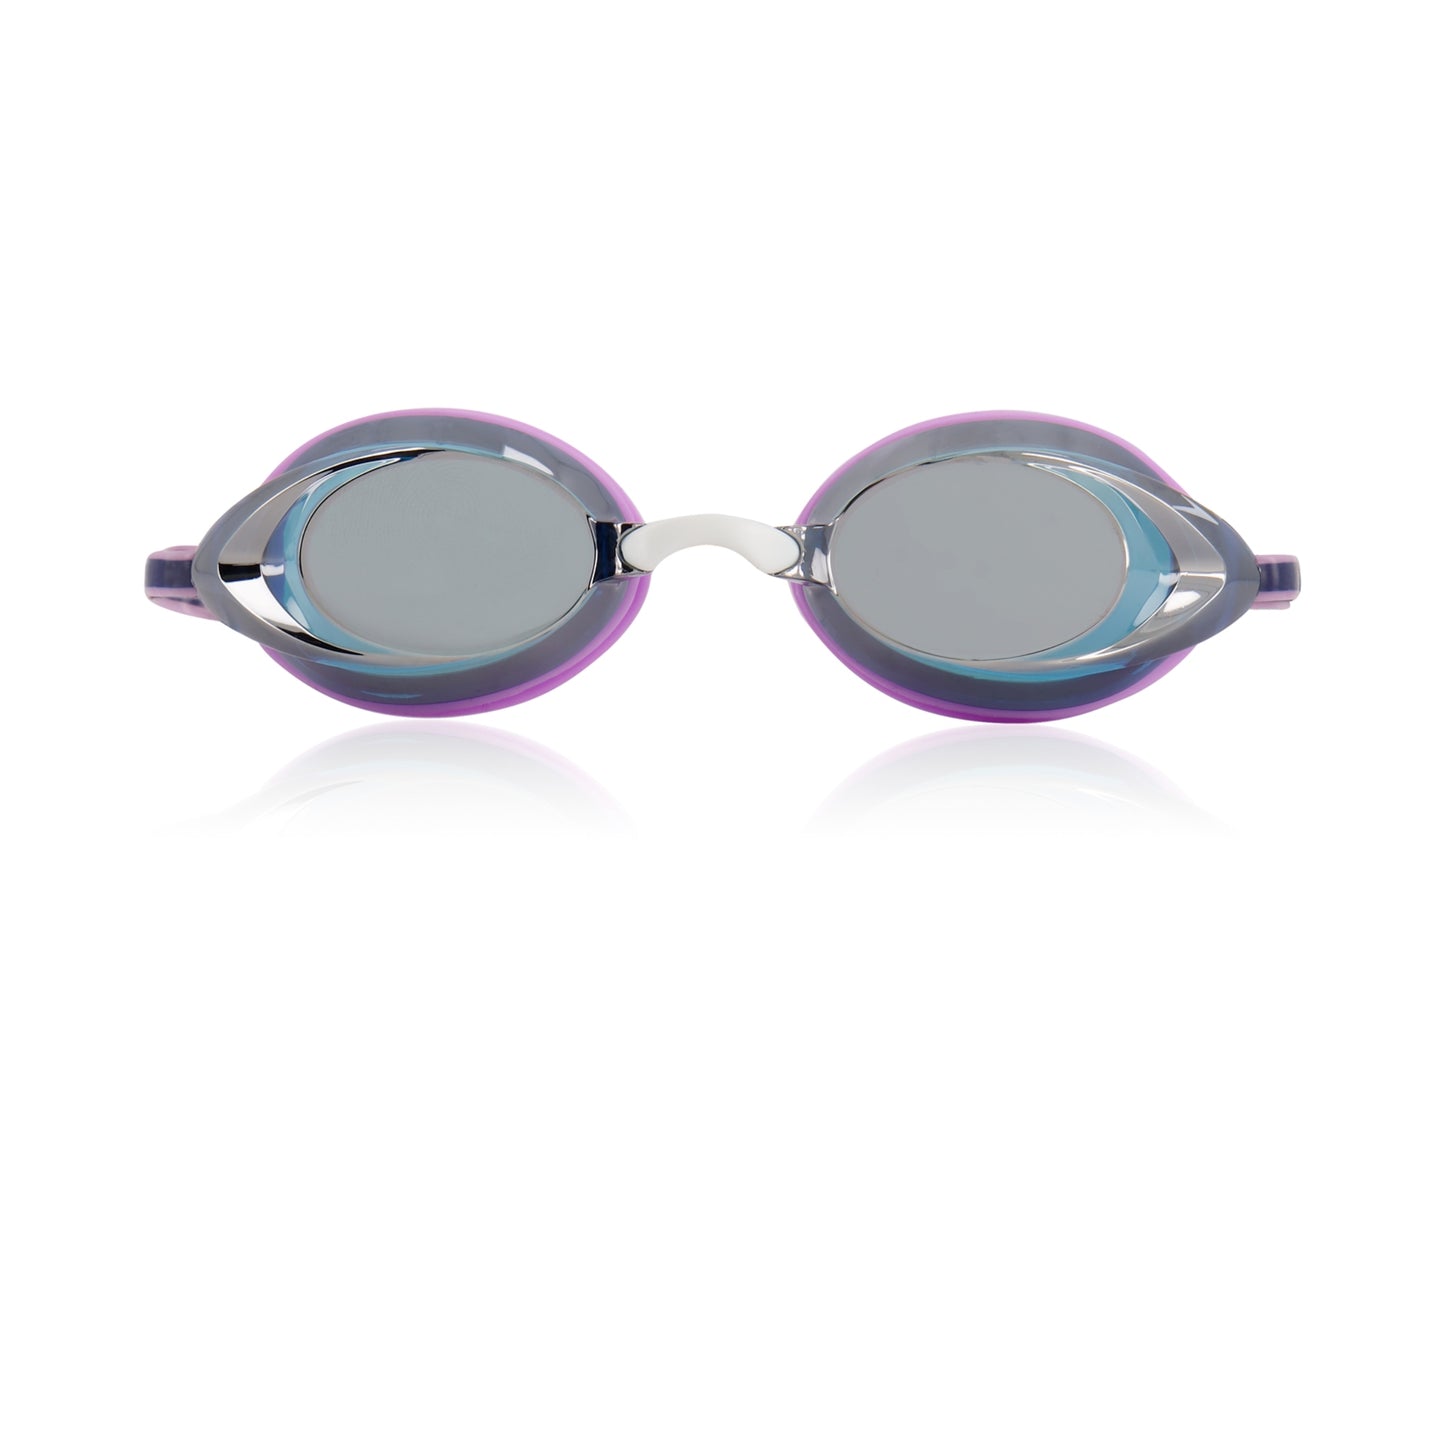 Speedo Women's Vanquisher 2.0 Mirrored Swim Goggle - Archroma/CBT/SI Purple